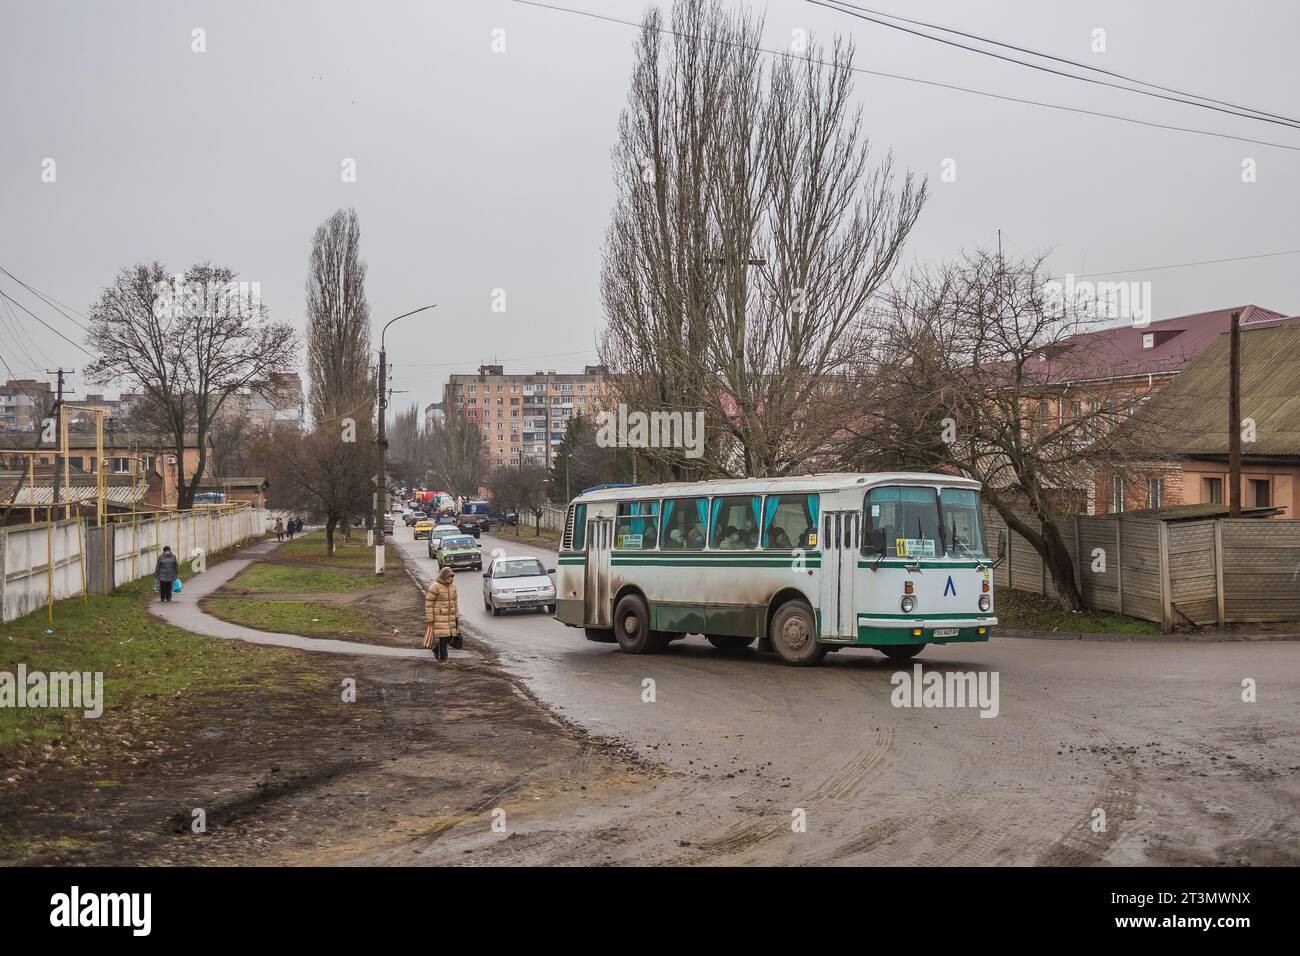 30.12.2020. Ukraine, Oleksandriya. Laz-695 on urban route. Stock Photo